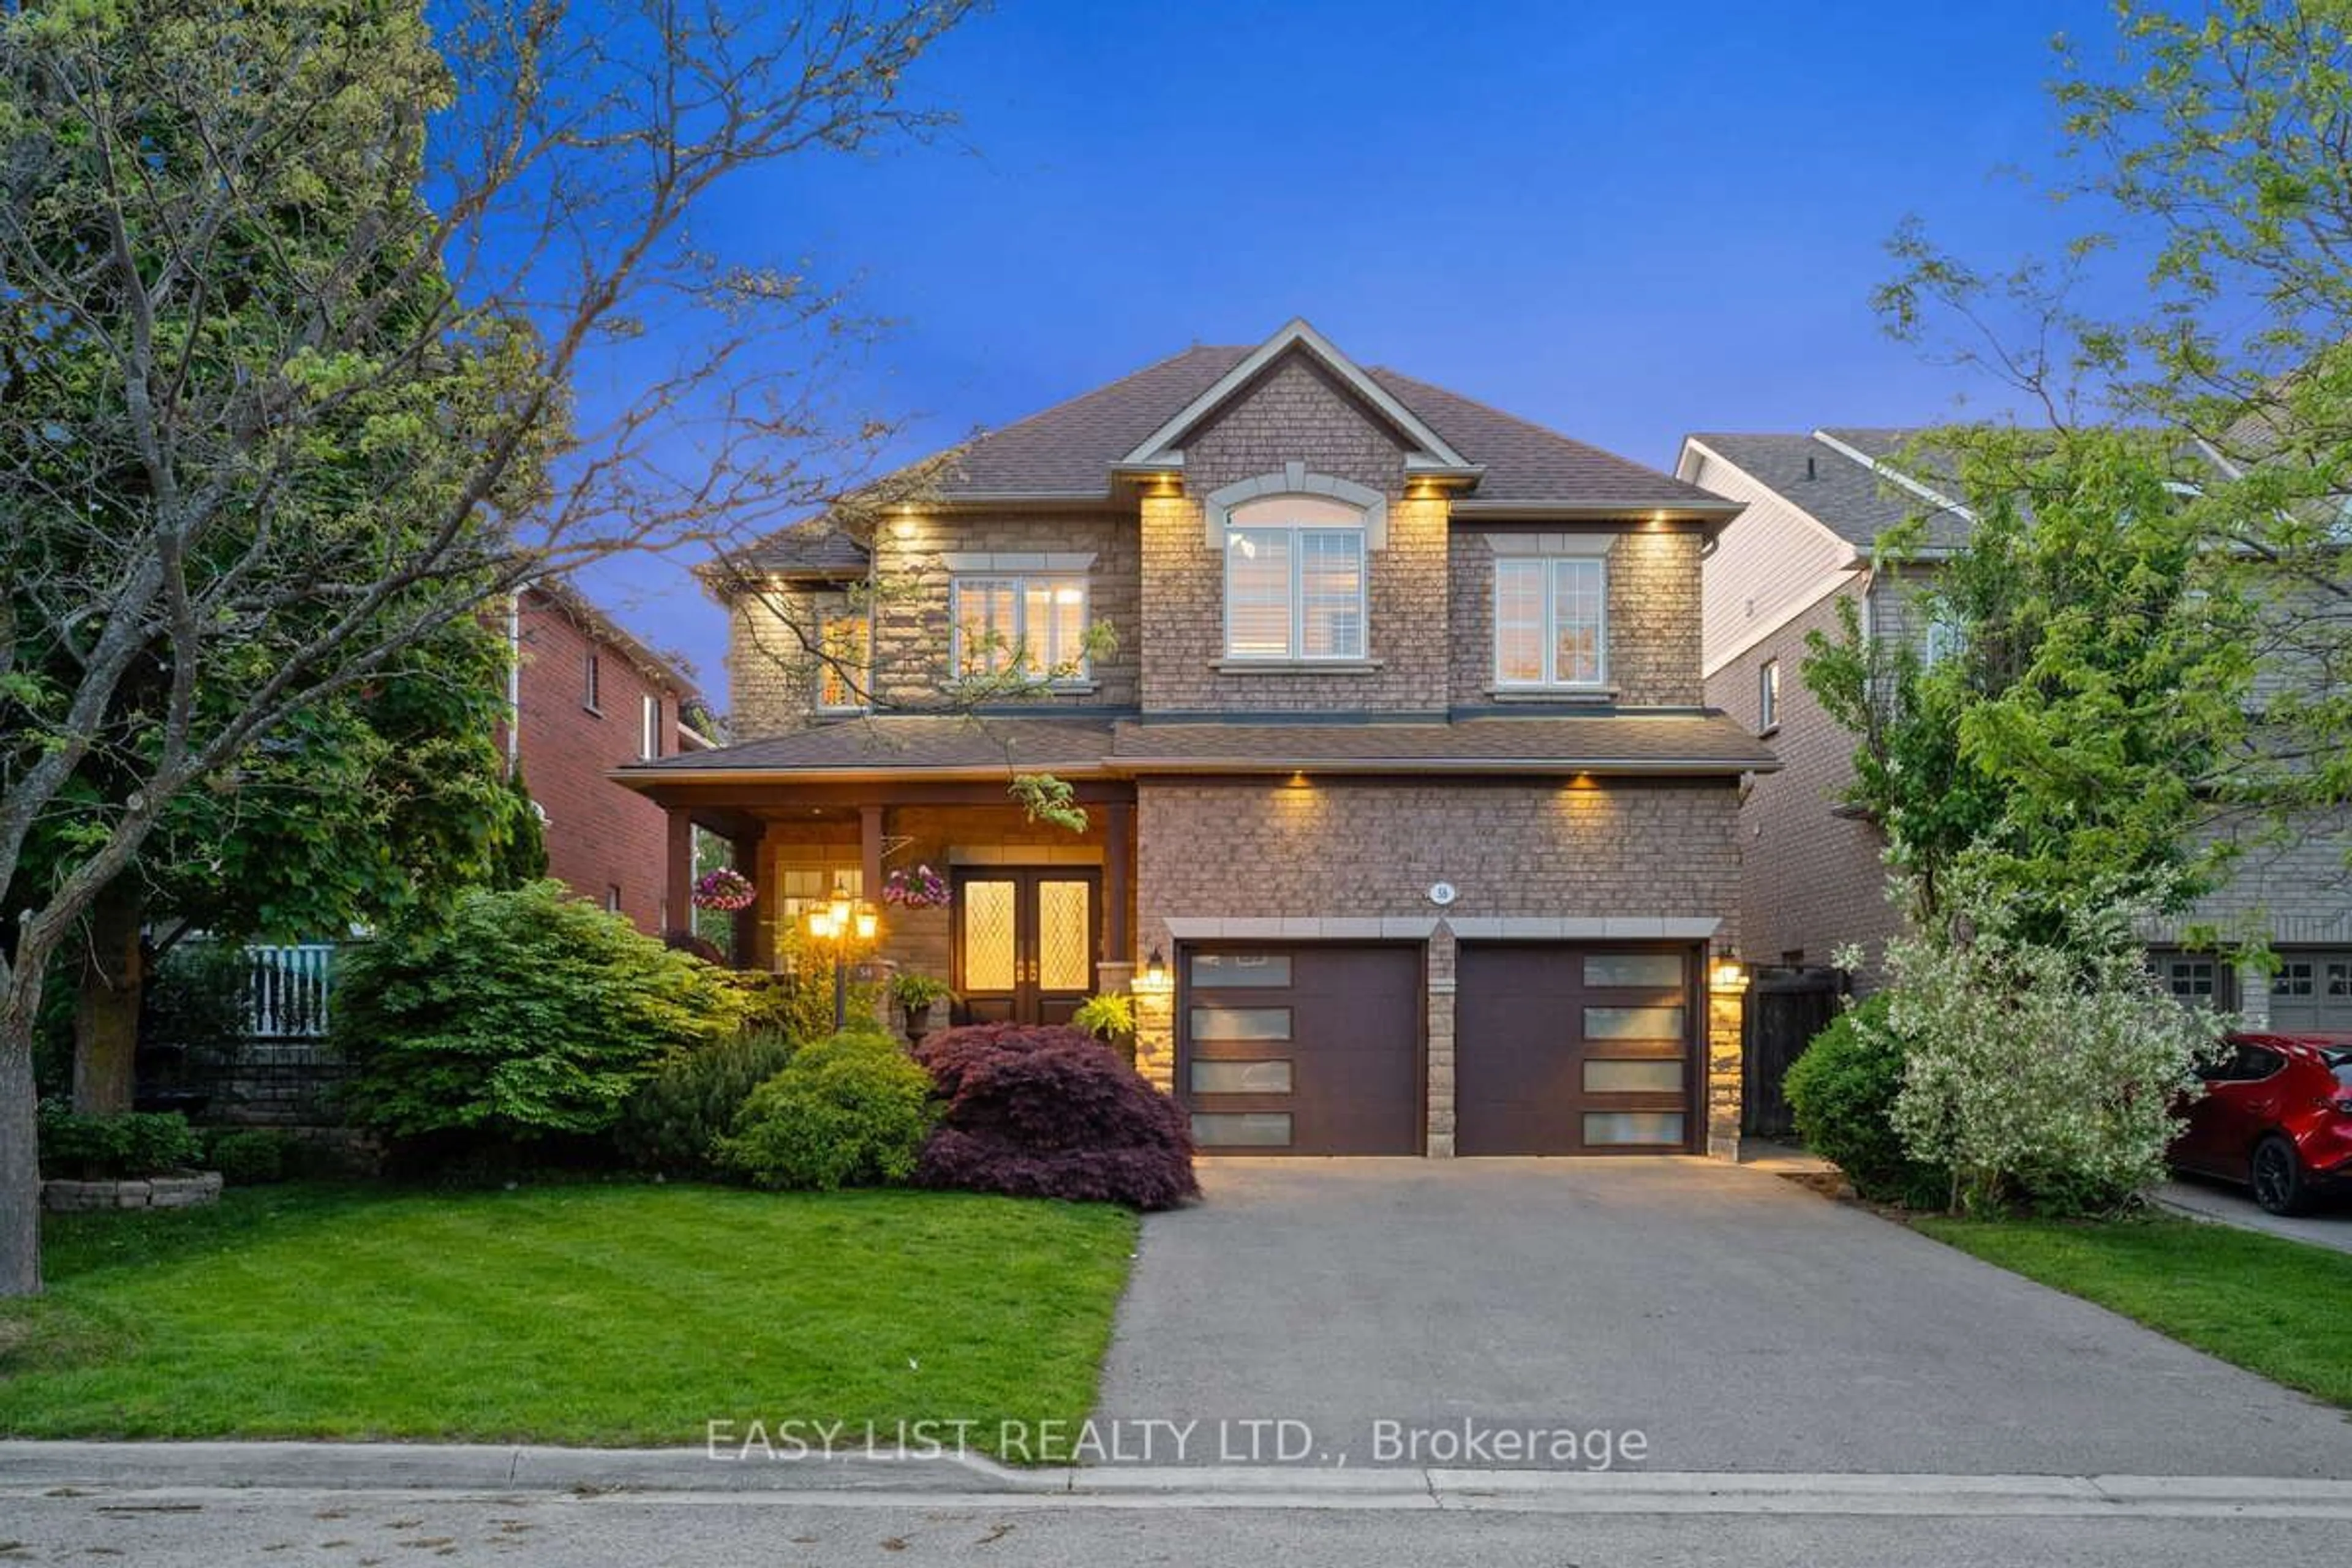 Home with brick exterior material for 58 Stonebrook Cres, Halton Hills Ontario L7G 6E5